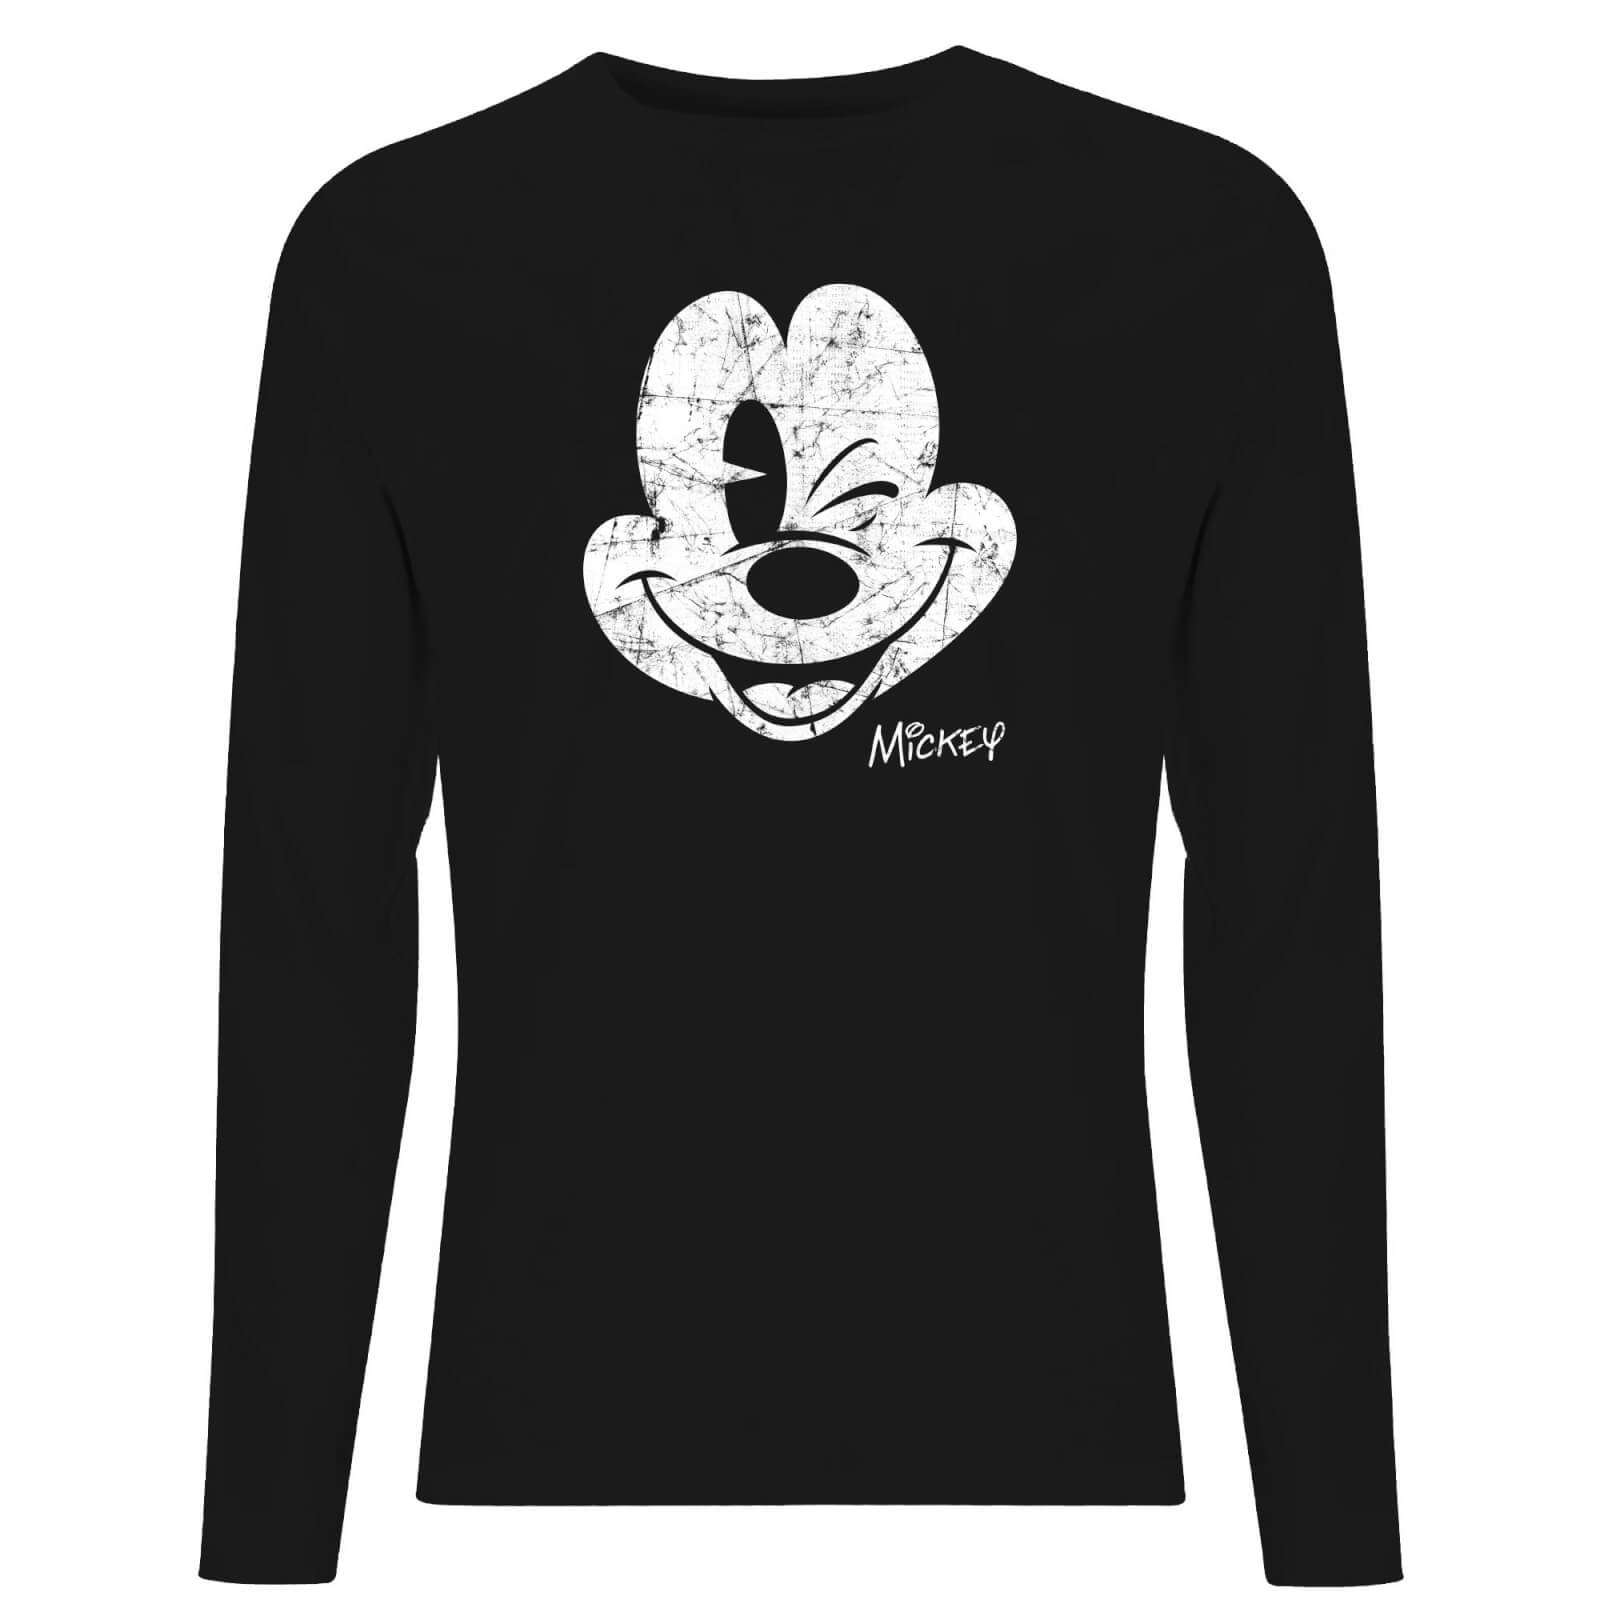 Disney Mickey Mouse Worn Face Men's Long Sleeve T-Shirt - Black - XS - Black